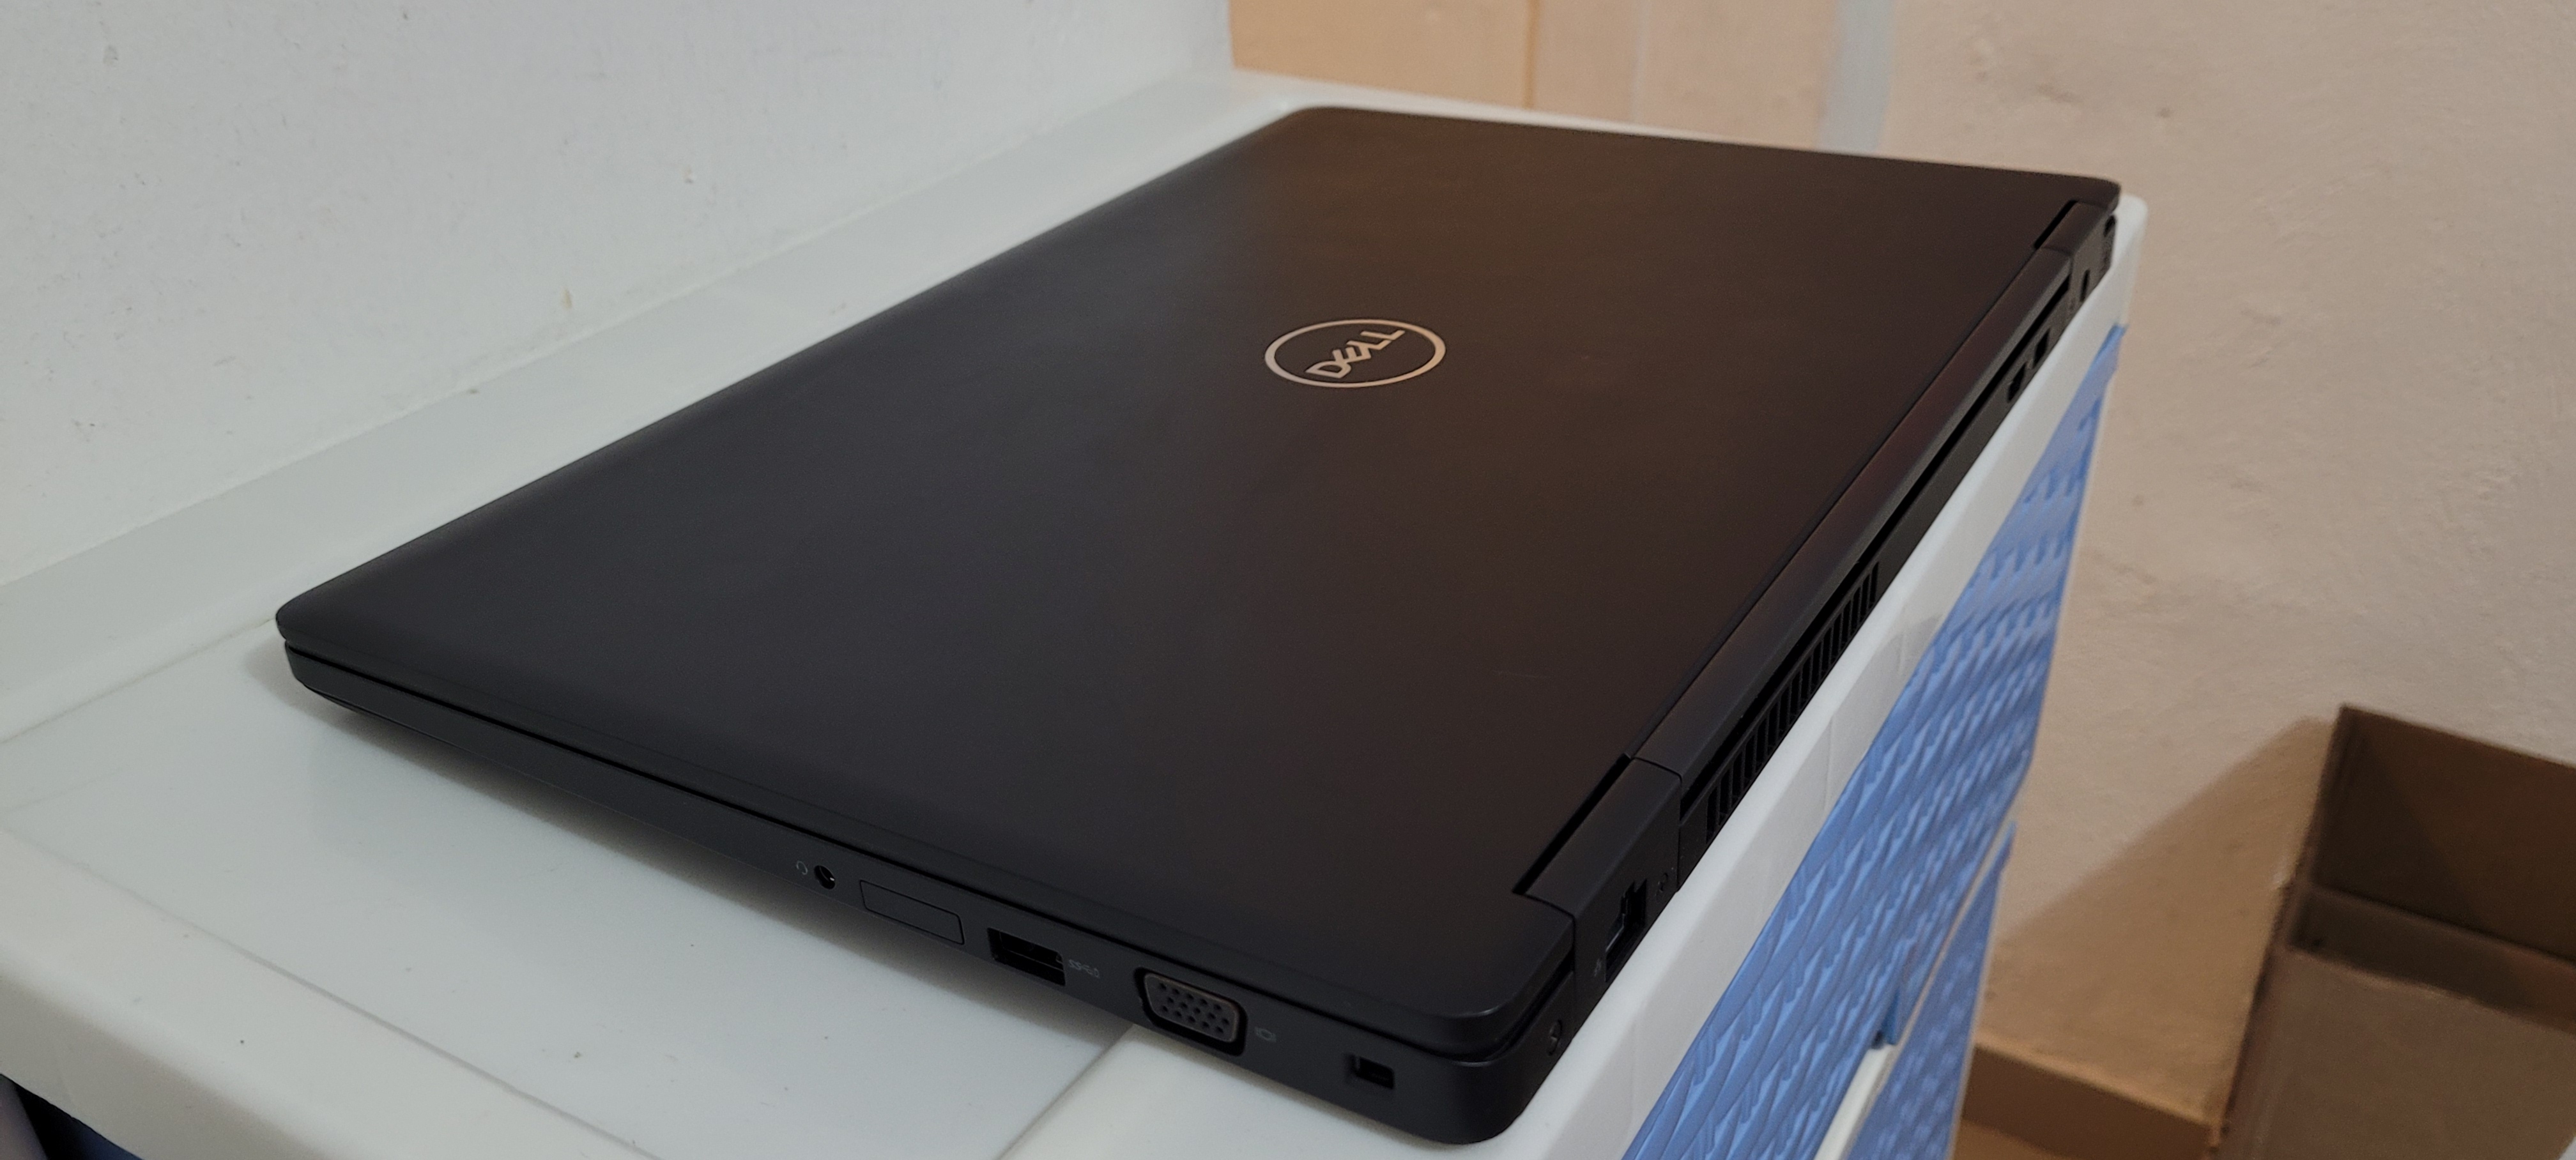 computadoras y laptops - Dell Slim 14 Pulg Core i7 6ta Gen Ram 8gb ddr4 Disco 256gb SSD Solido New 2